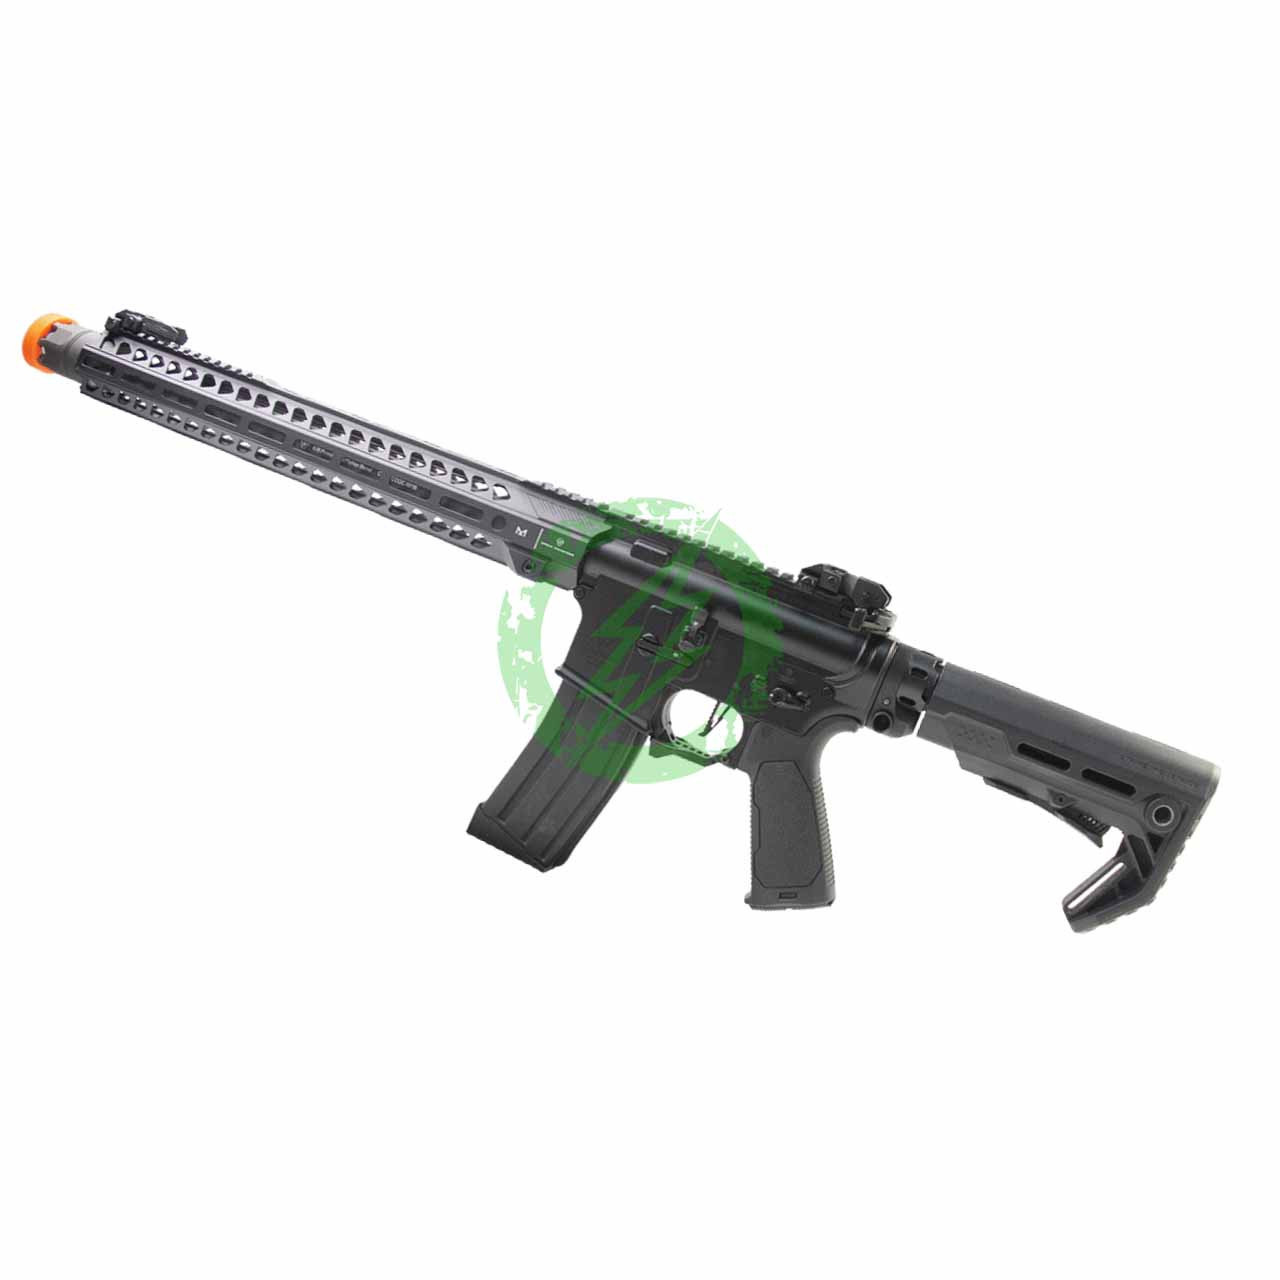  EMG Strike Industries Licensed Tactical AEG G&P V2 GATE Aster Gearbox | Black Carbine 400 FPS 